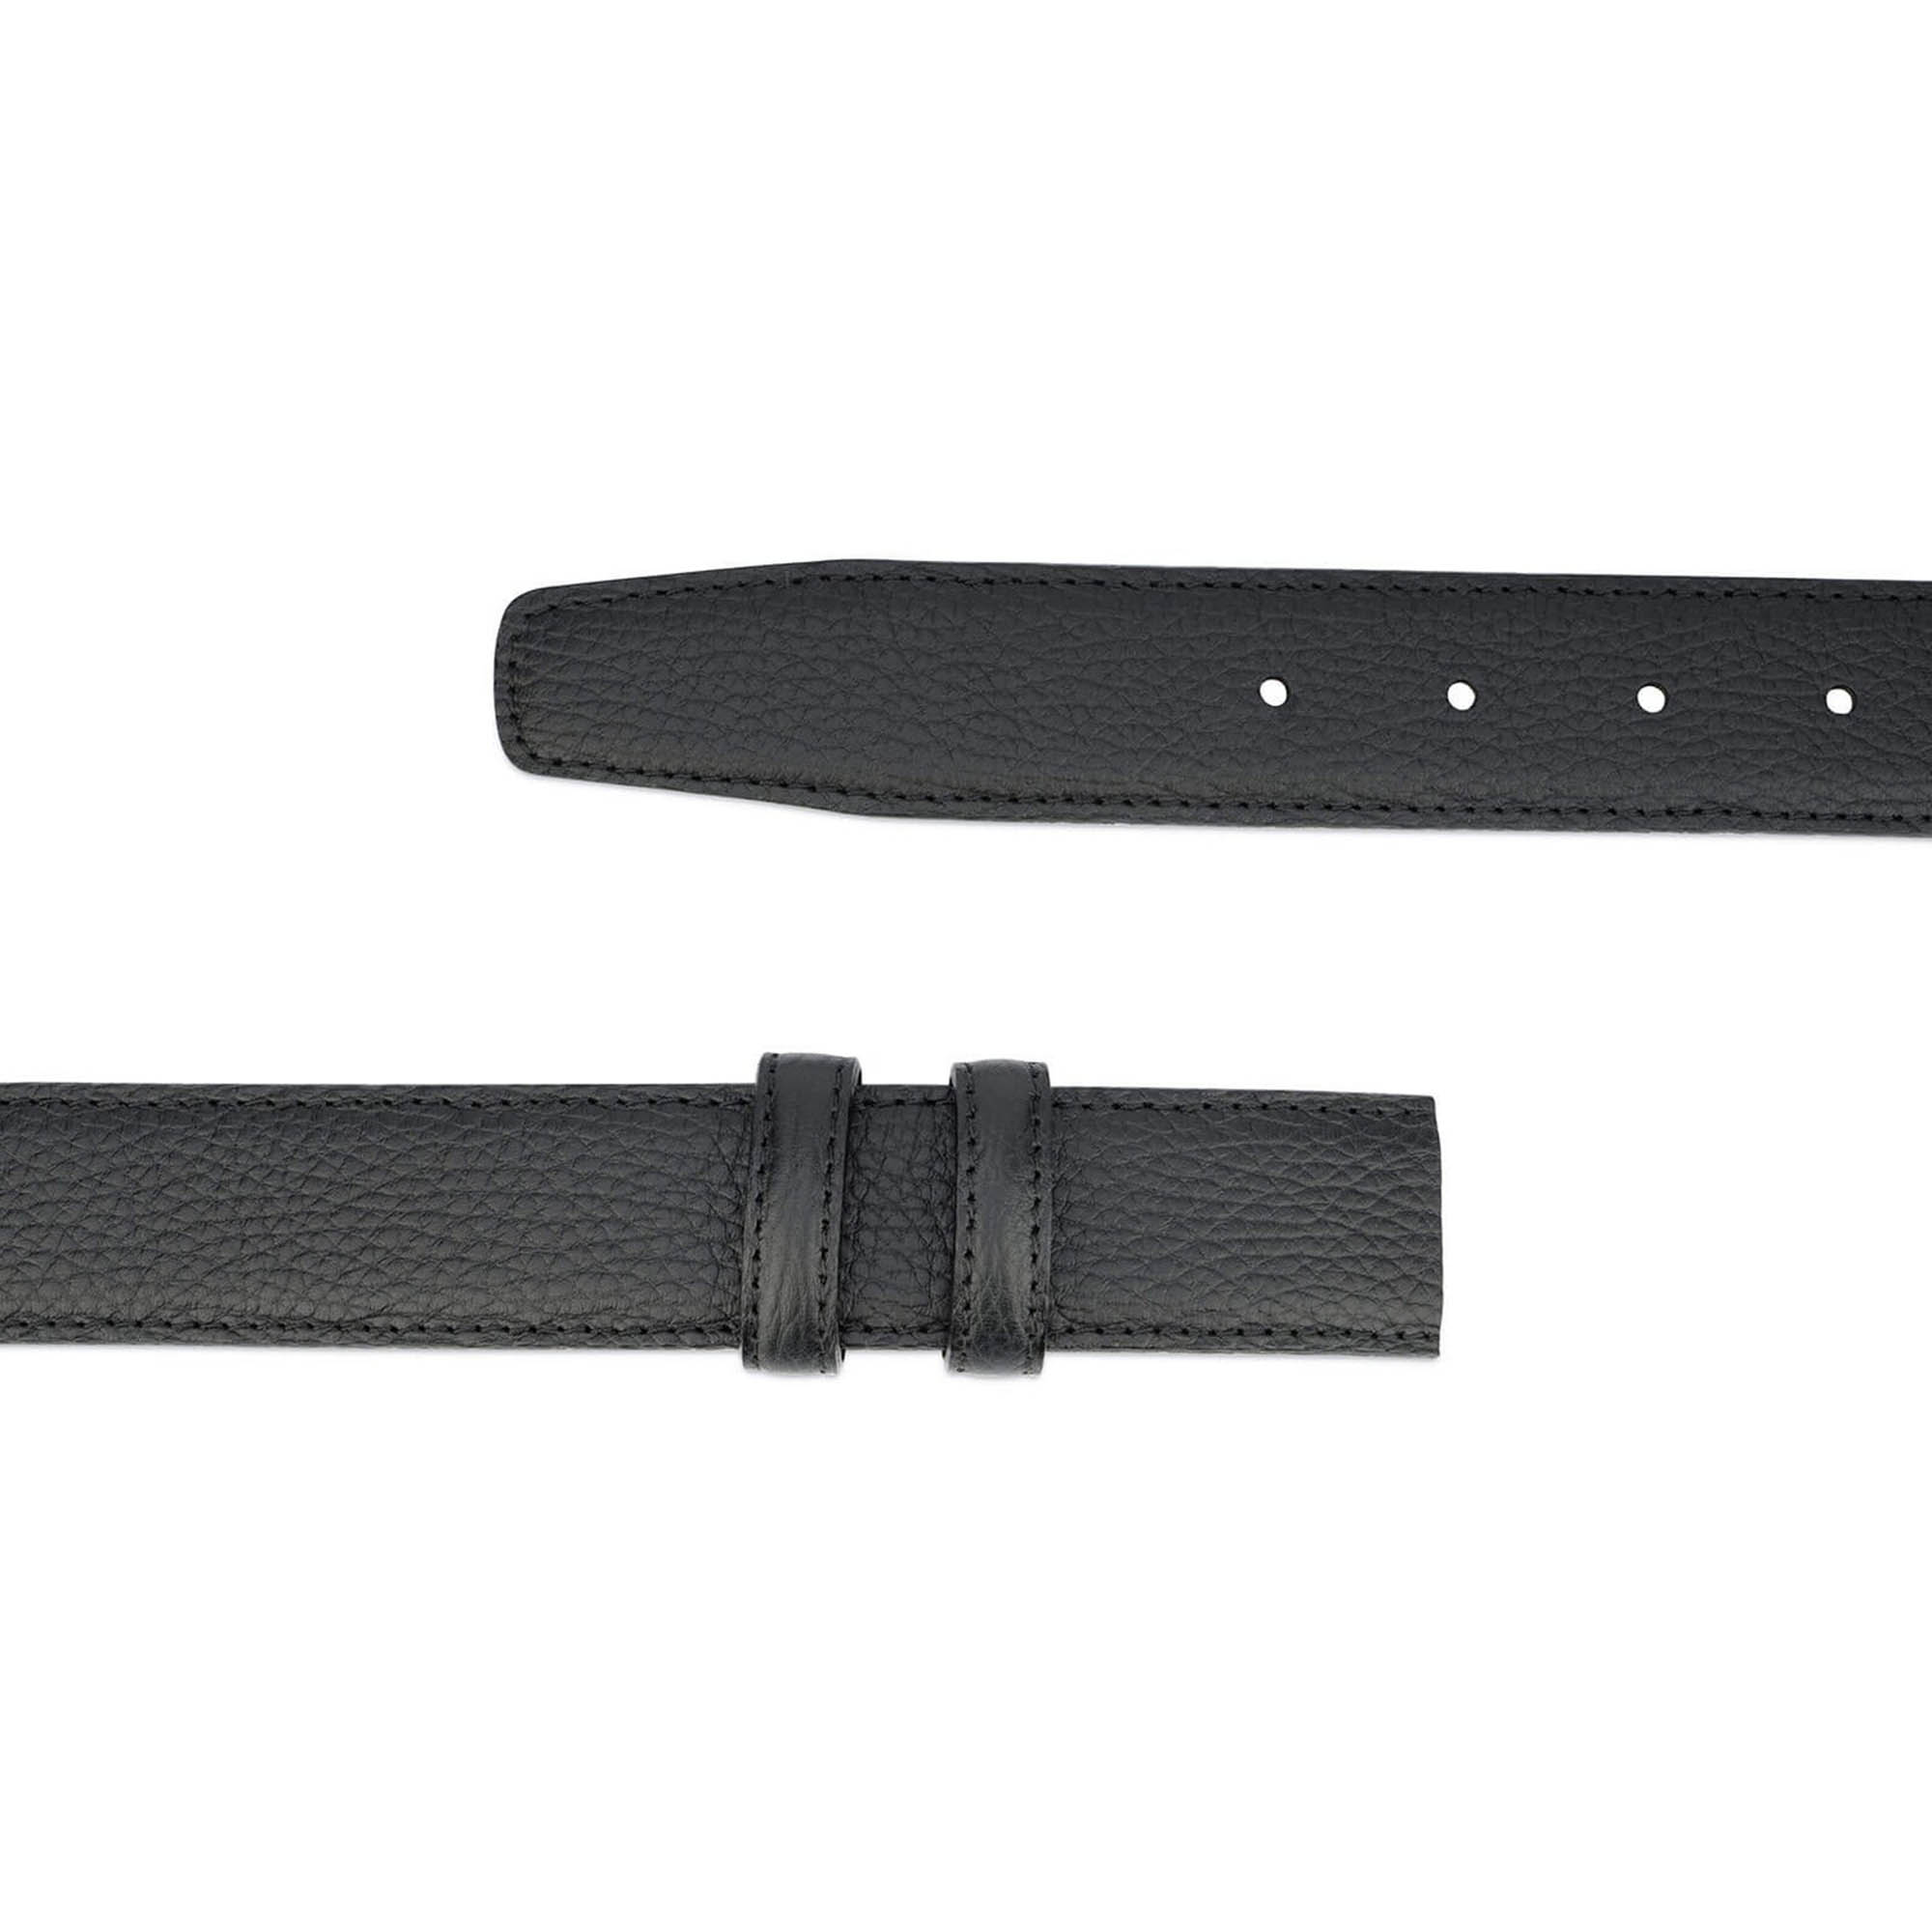 Buy Pebbled Black Mens Belt Strap 35 mm | Genuine Leather | Capo Pelle